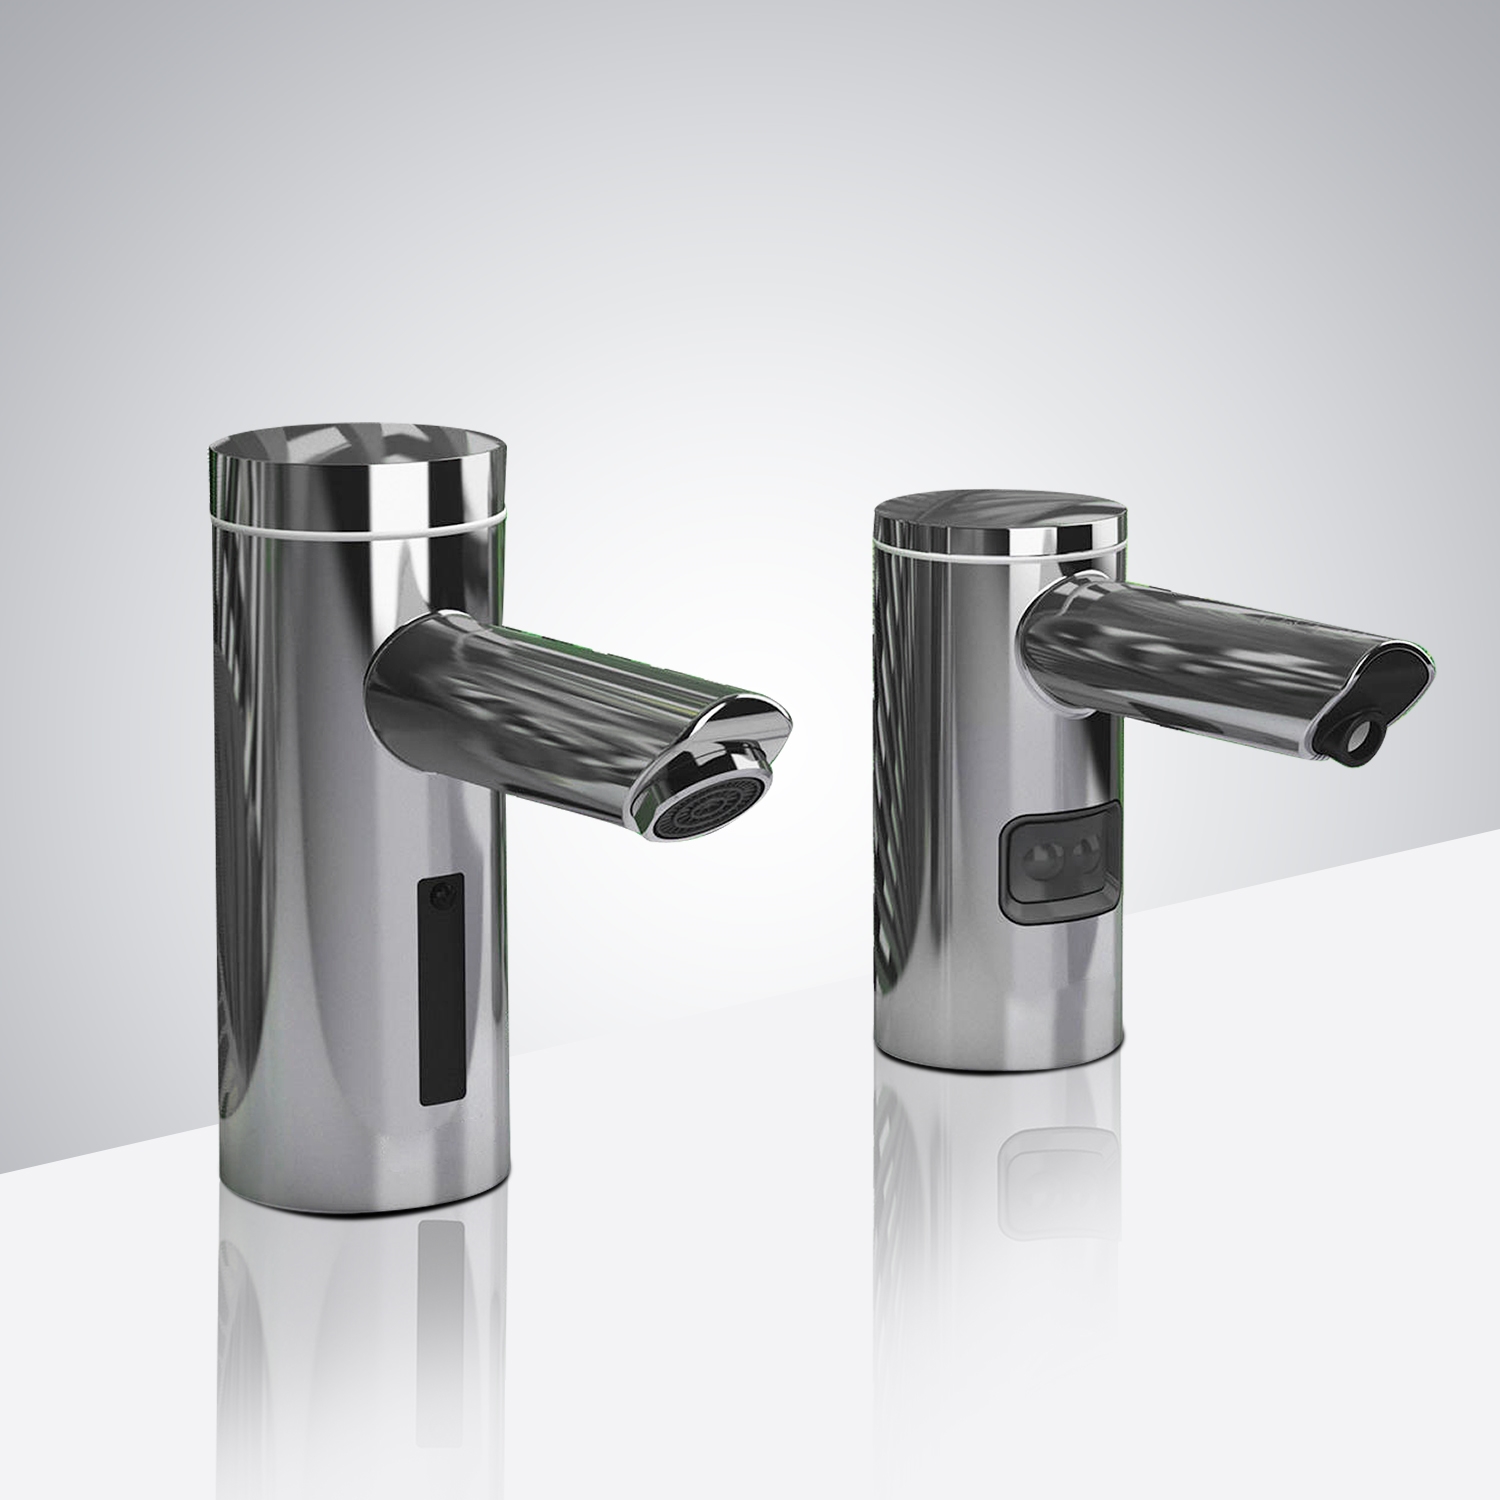 Fontana Deauville Commercial Hands-Free Motion Sensor Faucet & Automatic Liquid Soap Dispenser for Restrooms